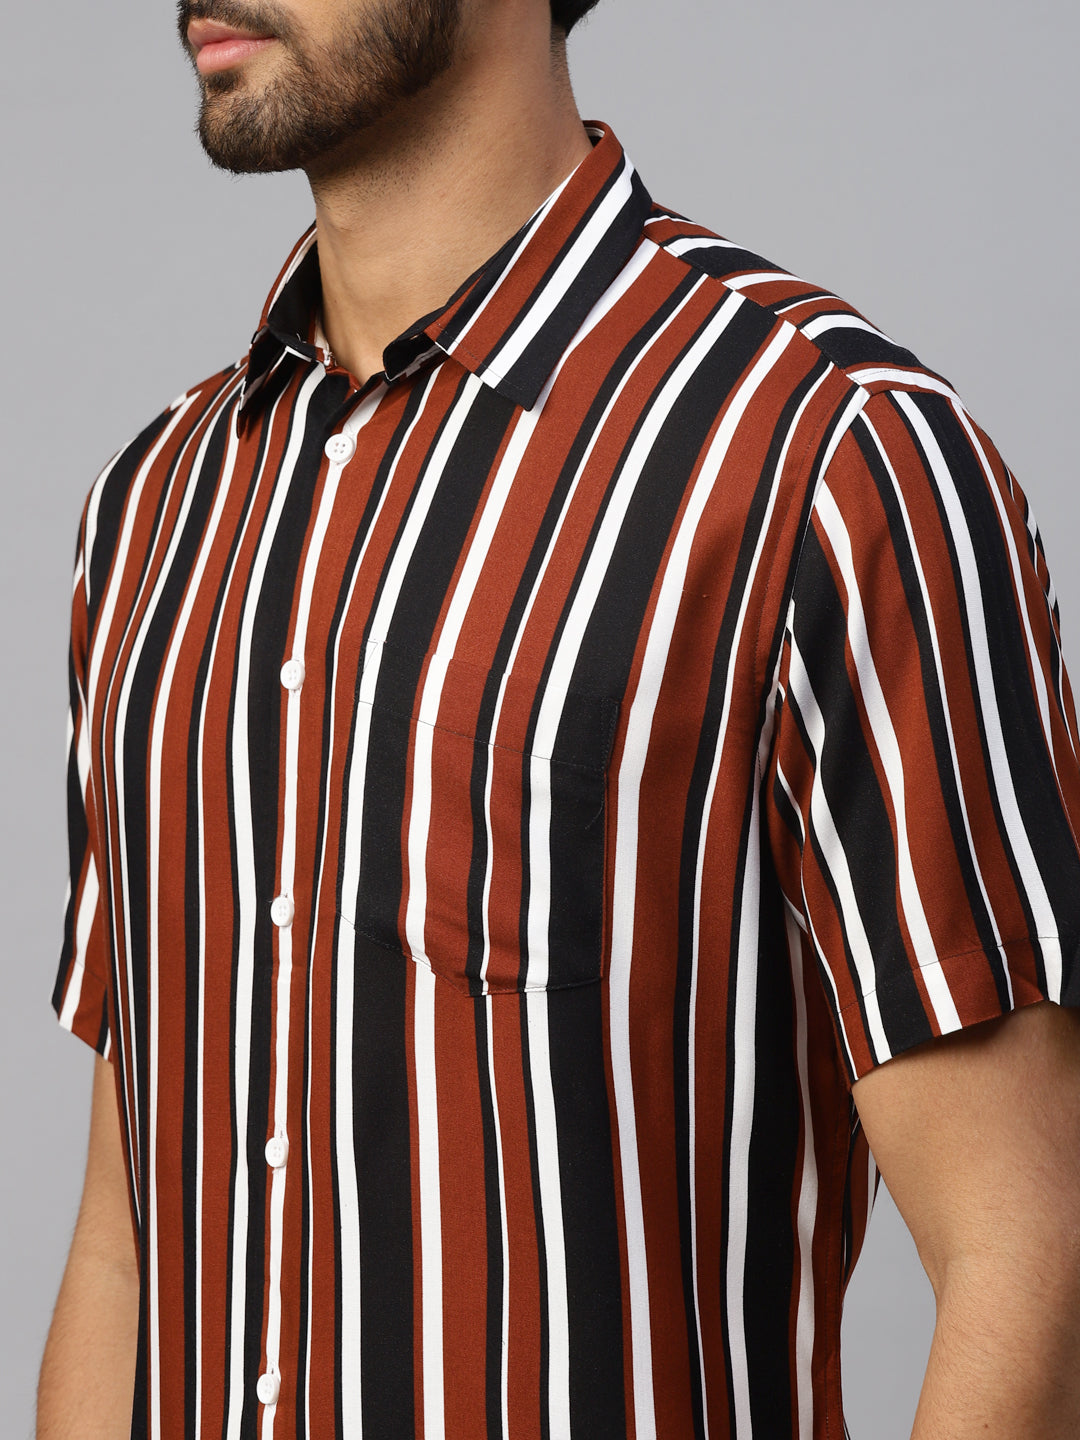 Don Vino Men's Multi-Color Stripes Slim Fit Resort Shirt